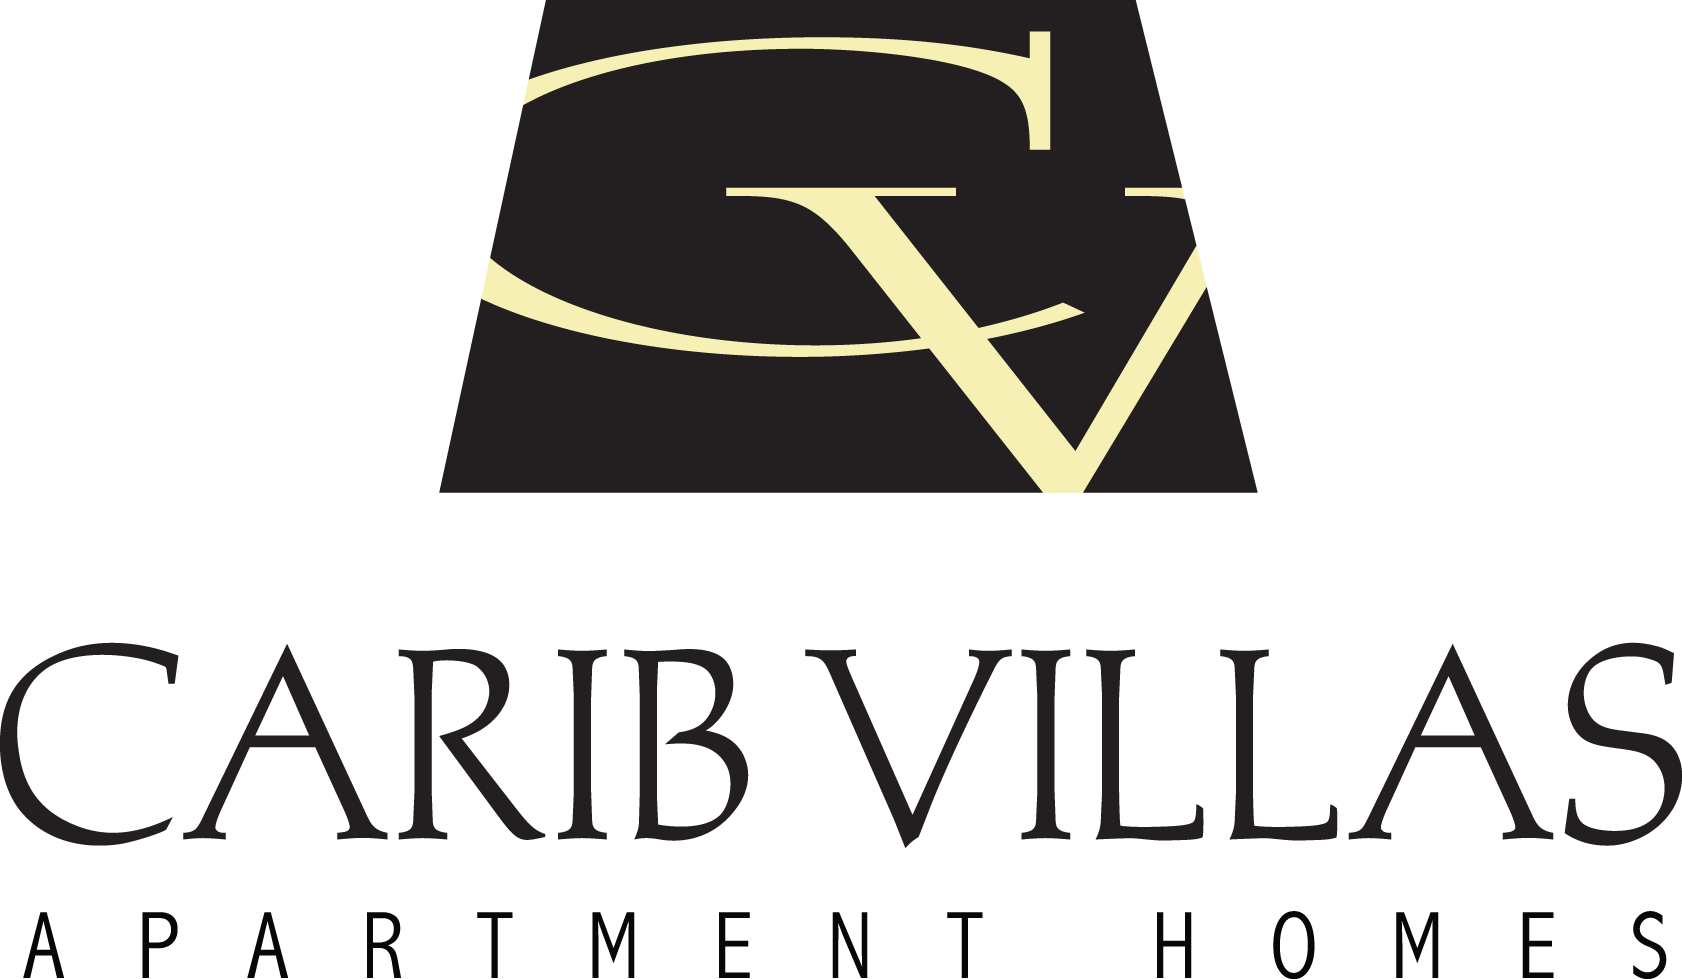 Miami Property Logo - Carib Villas Apartments (1682x979)